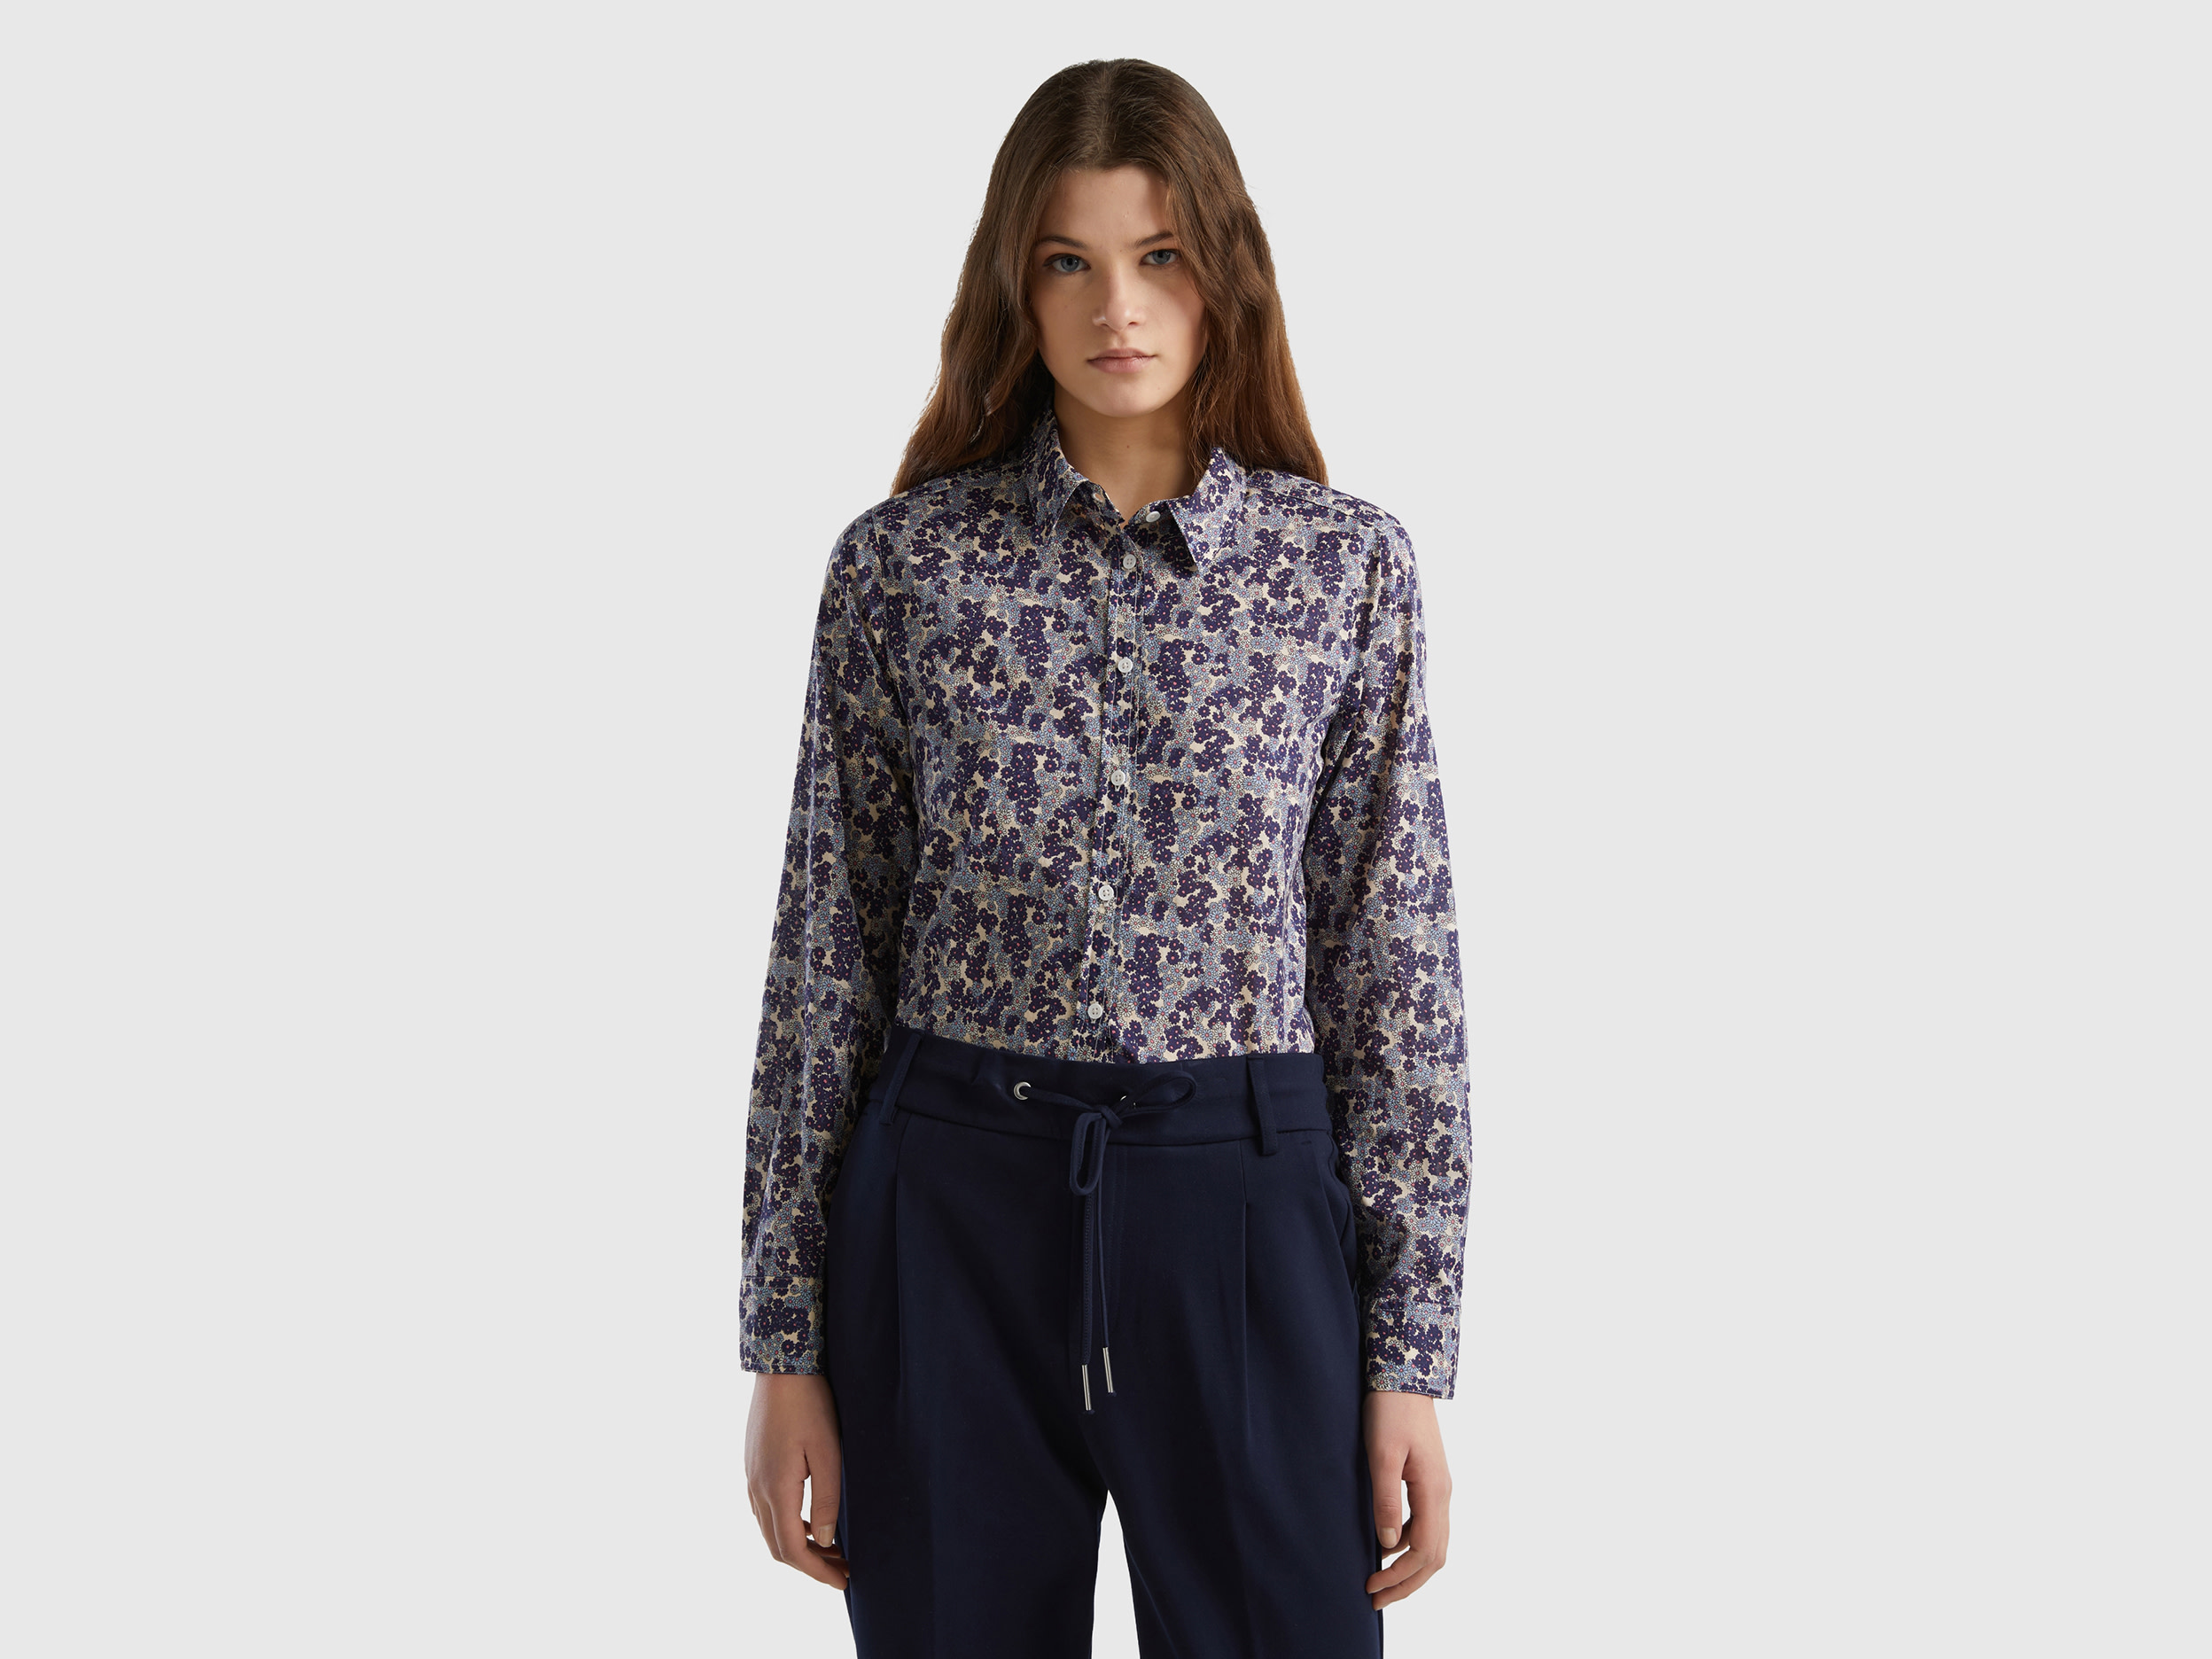 Benetton, 100% Cotton Patterned Shirt, size XL, Lilac, Women